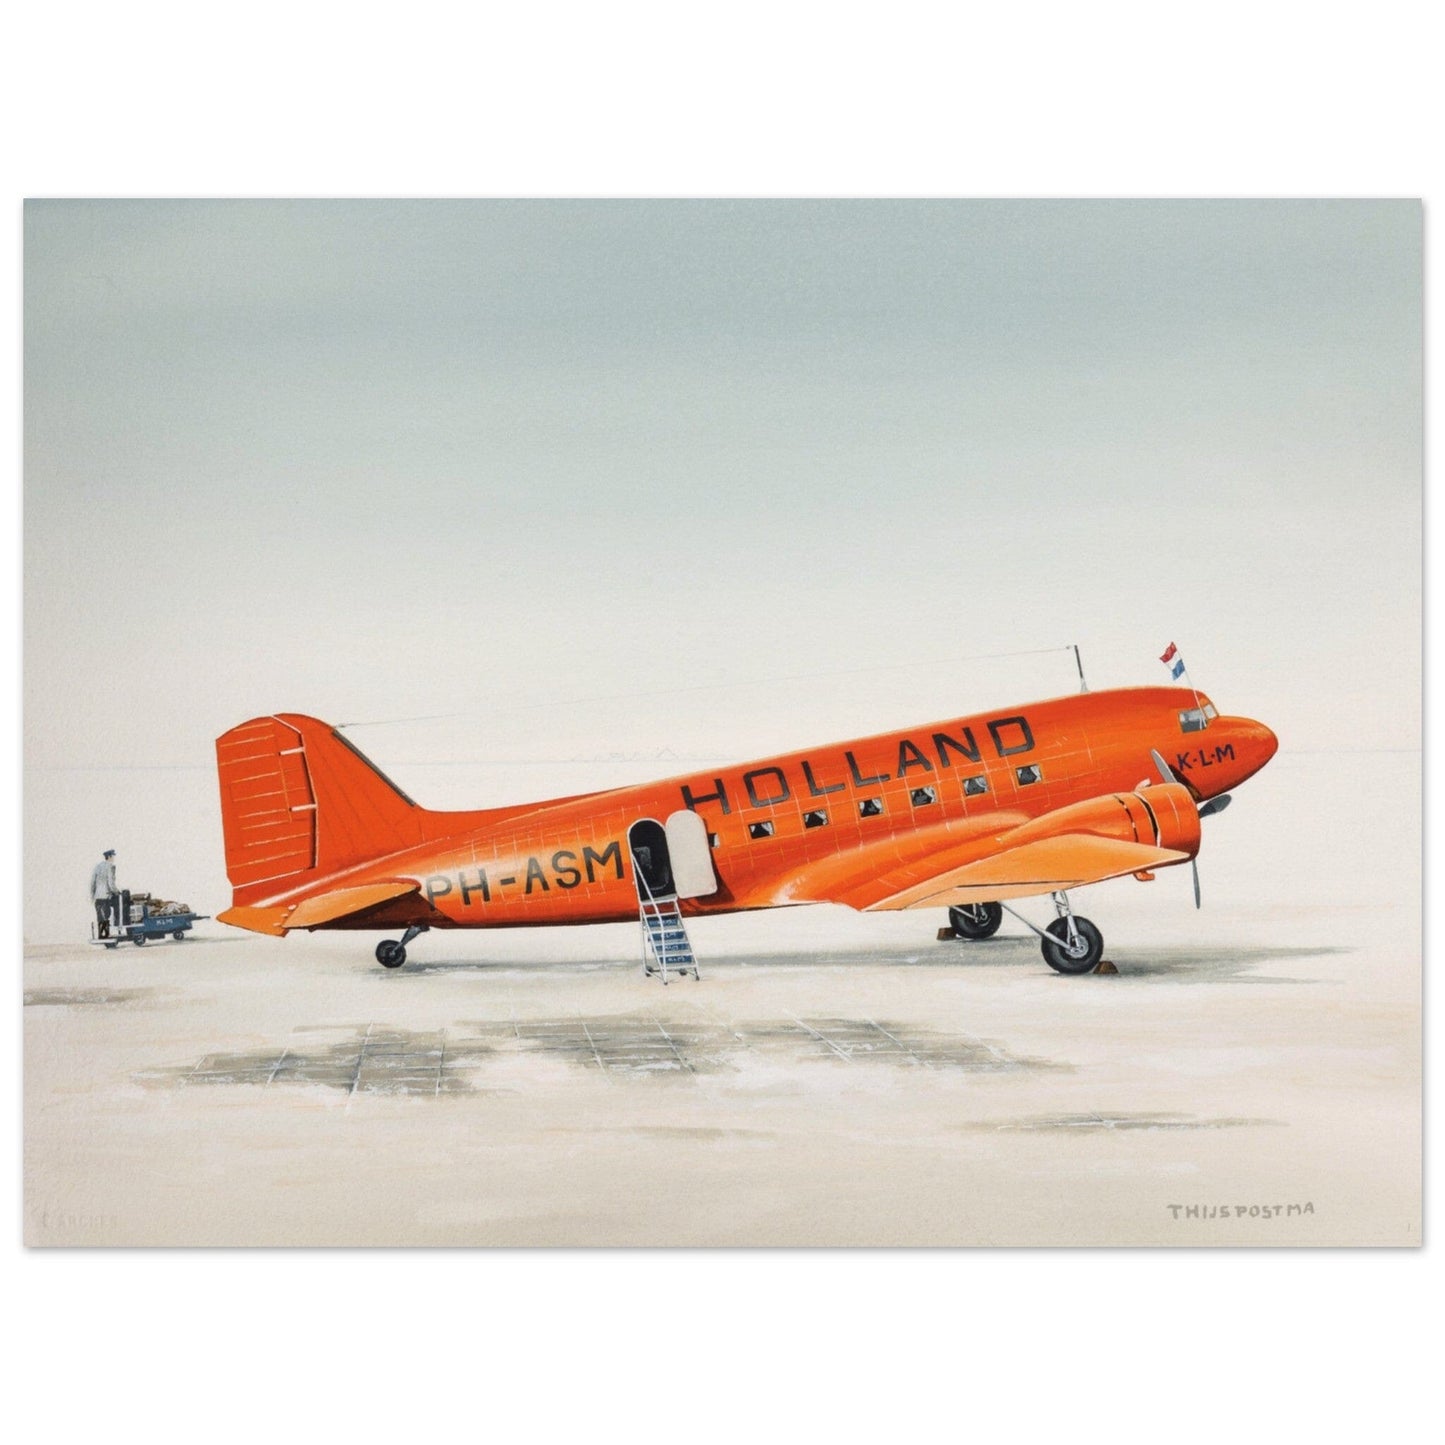 Thijs Postma - Poster - Douglas DC-3 KLM PH-ASM Orange Poster Only TP Aviation Art 45x60 cm / 18x24″ 